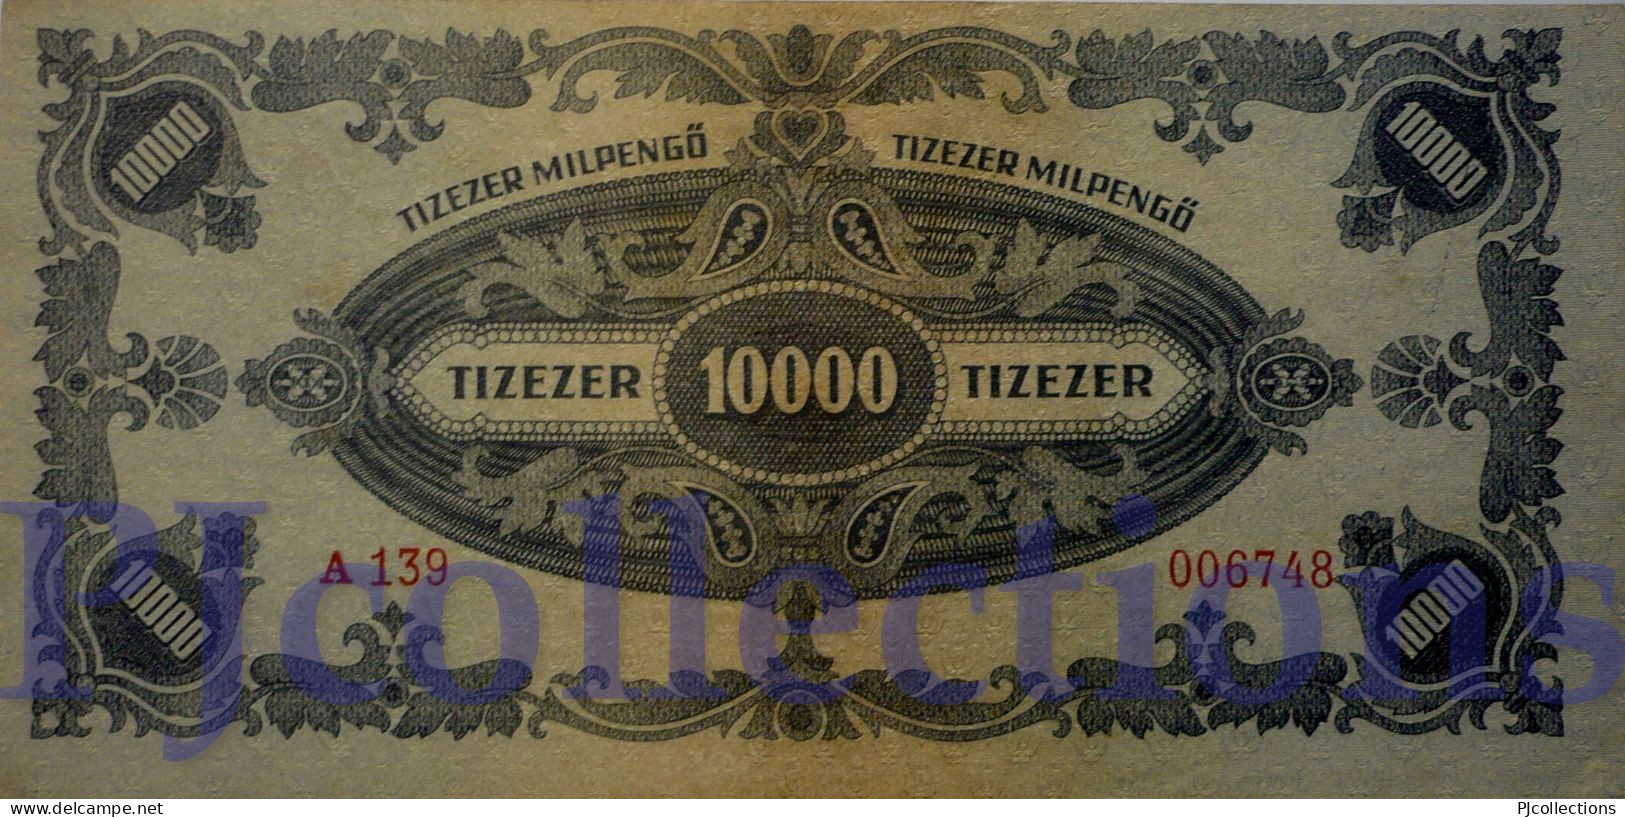 HUNGARY 10000 MILPENGO 1946 PICK 126 AU/UNC LOW SERIAL NUMBER "006748" - Ungheria